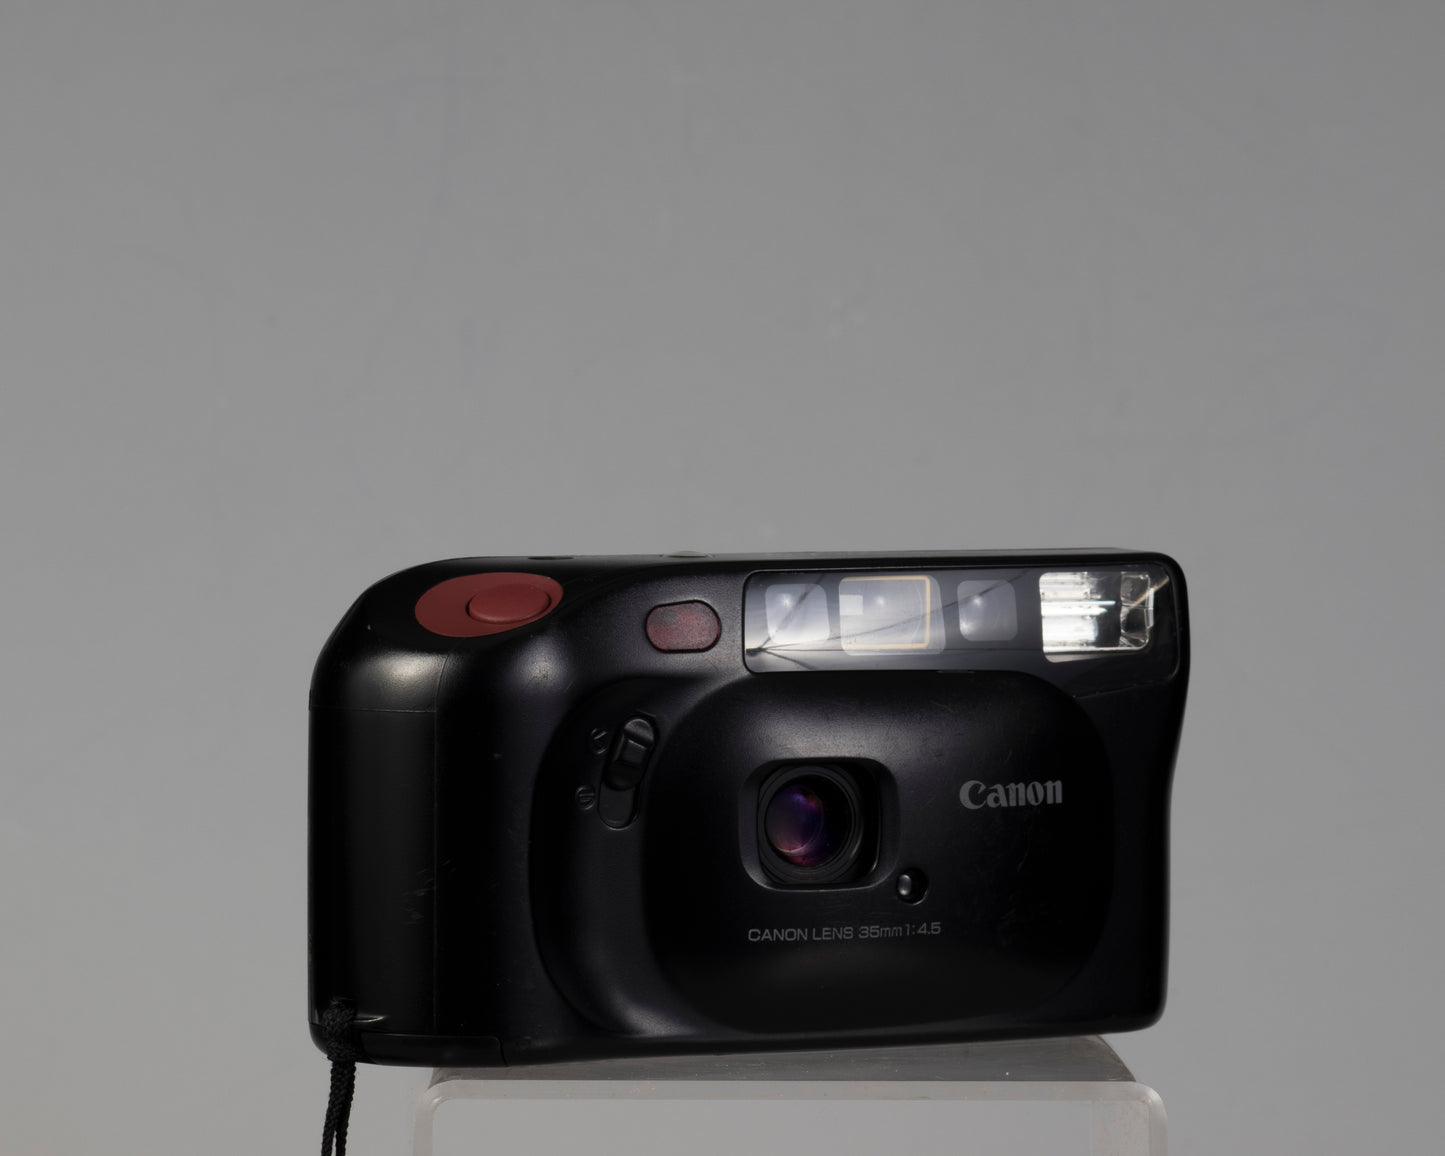 Canon Sure Shot Joy camera